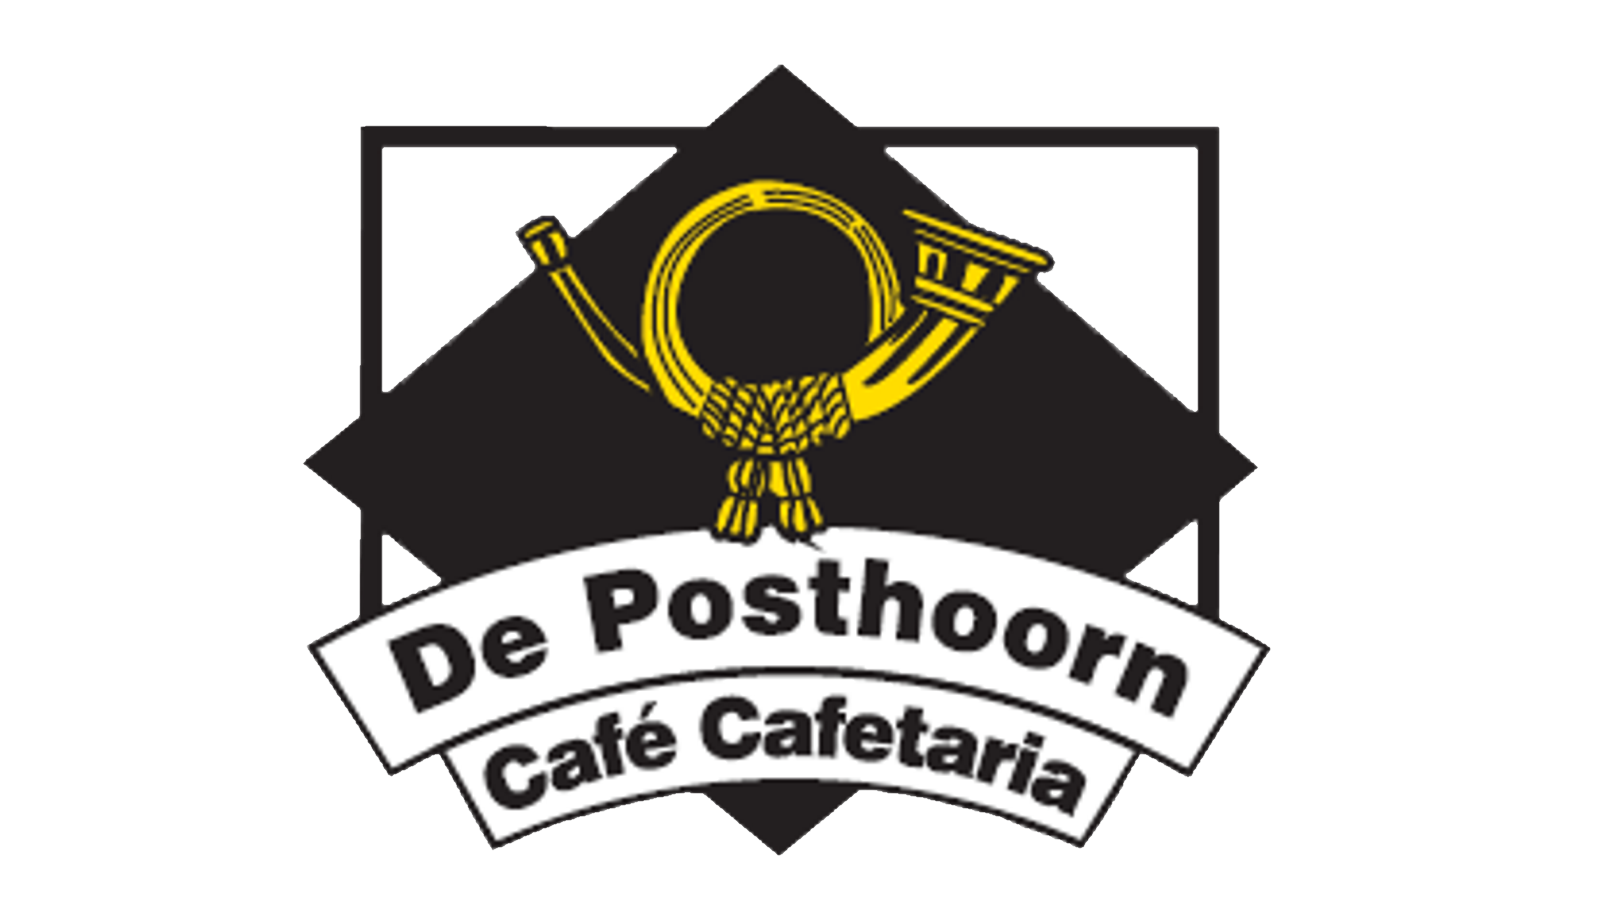 Cafe Cafetaria de Posthoorn